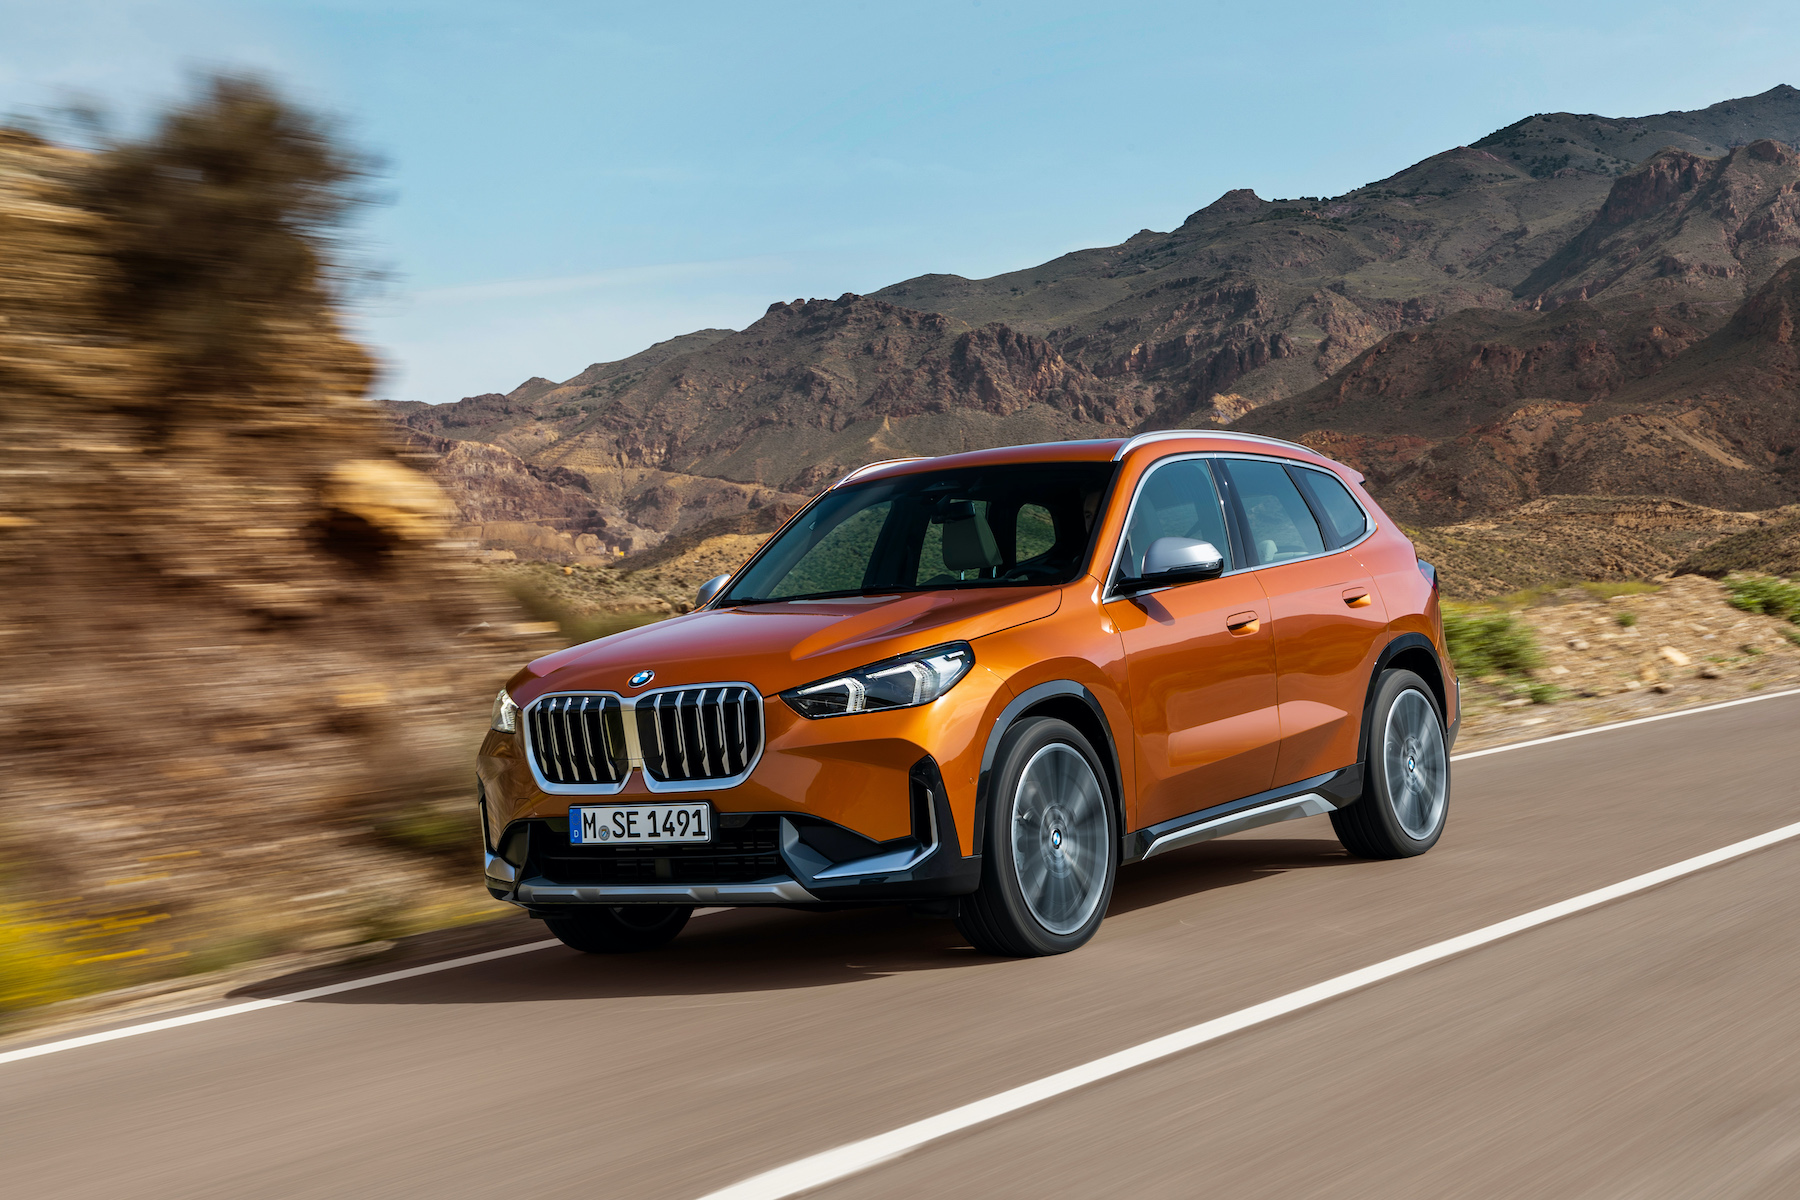 2023 BMW X1 review: all-wheel drive, highway handling, comfort